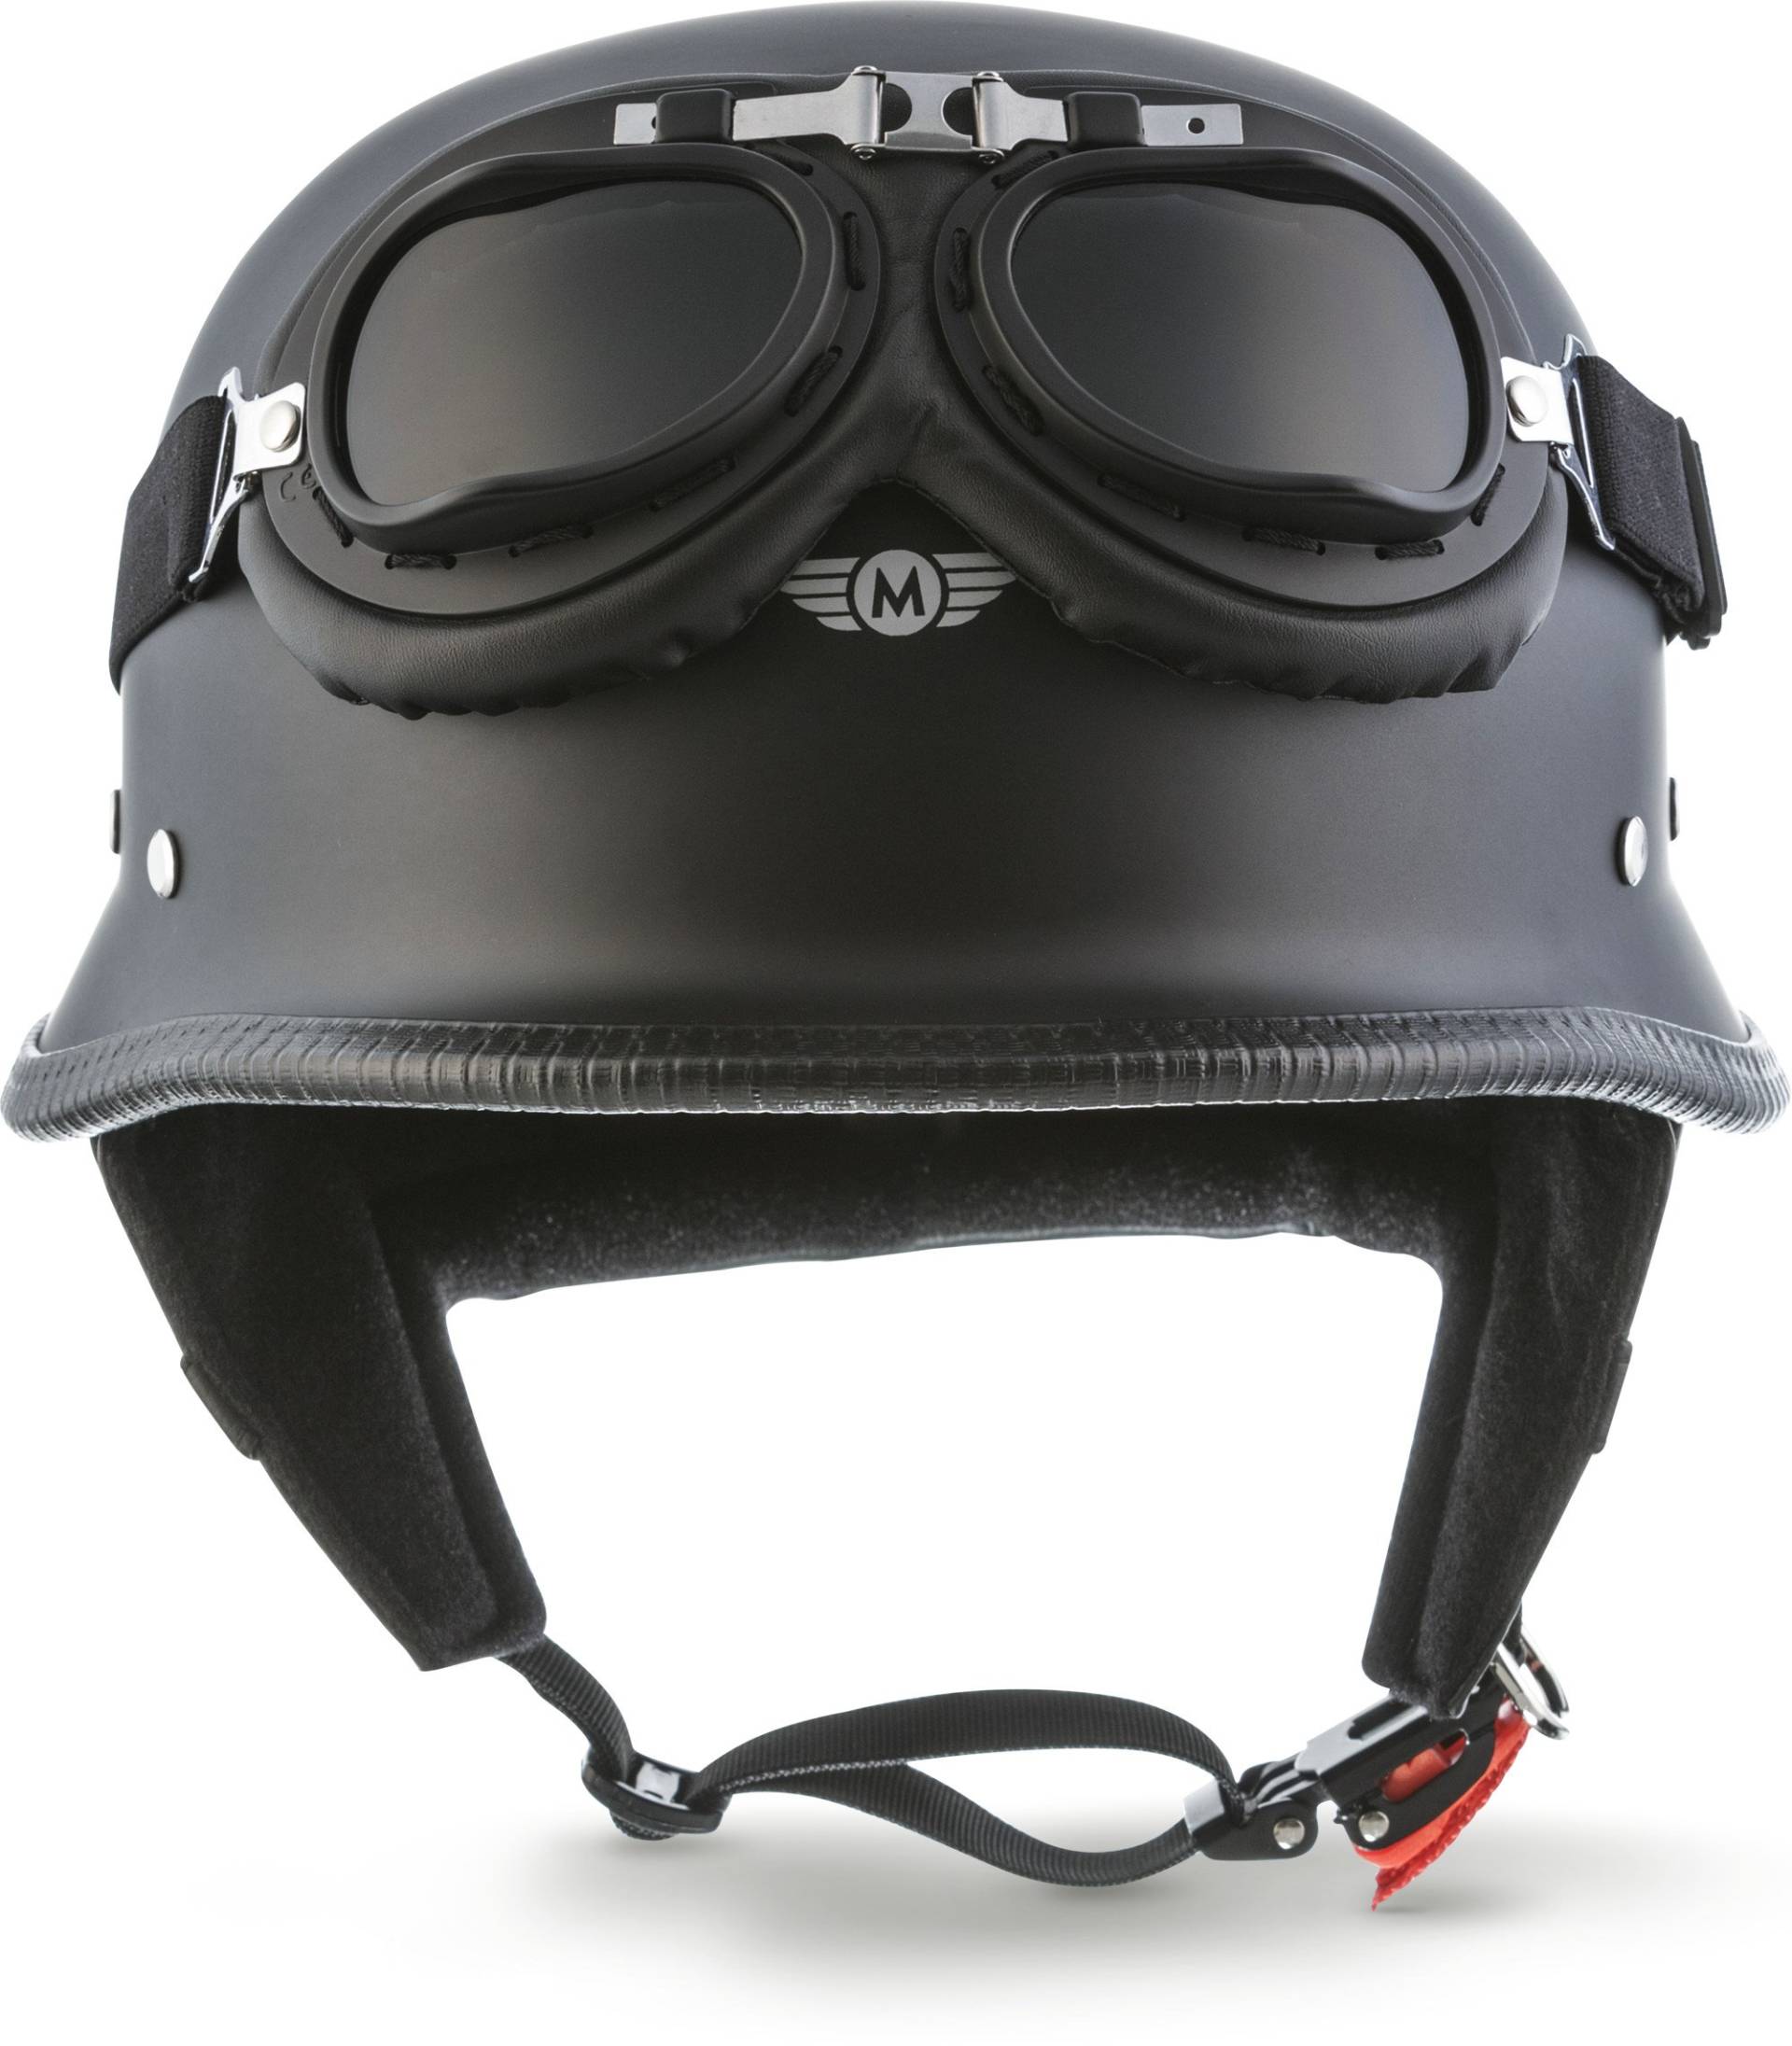 Moto Helmets® D33-Set „Matt Black“ · Brain-Cap · Halbschale Jet-Helm Motorrad-Helm Roller-Helm Scooter-Helm Bobber Mofa-Helm Chopper Retro Cruiser Vintage Pilot Biker Helmet Brille · M (57-58cm) von Moto Helmets